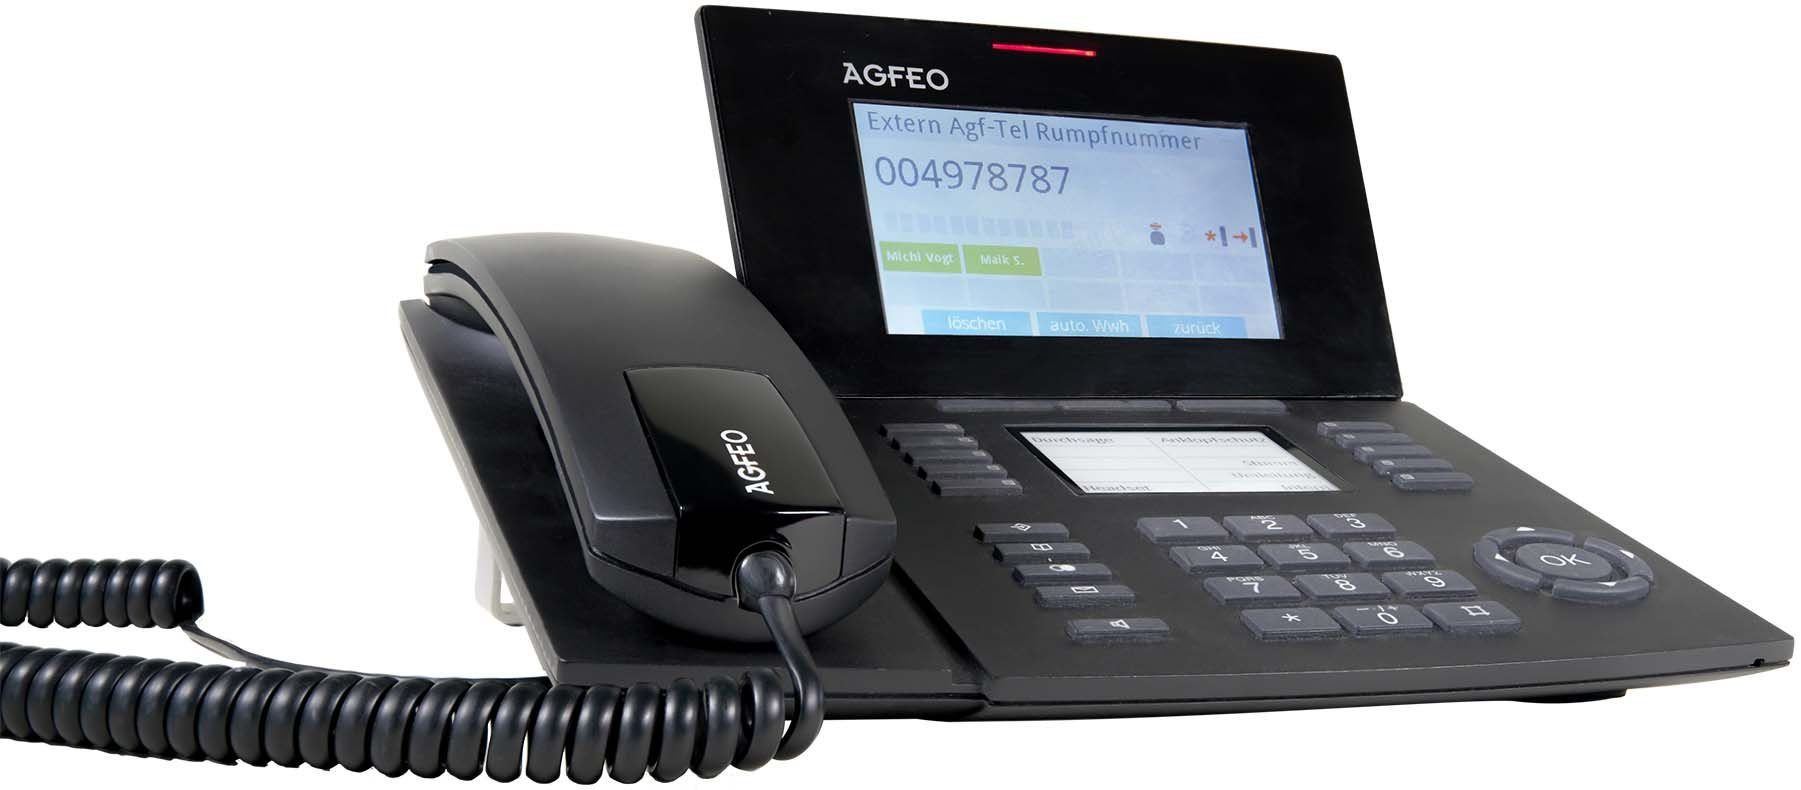 ST56 Systemtelefon SENSORfon Agfeo IP AGFEO schwarz Festnetztelefon